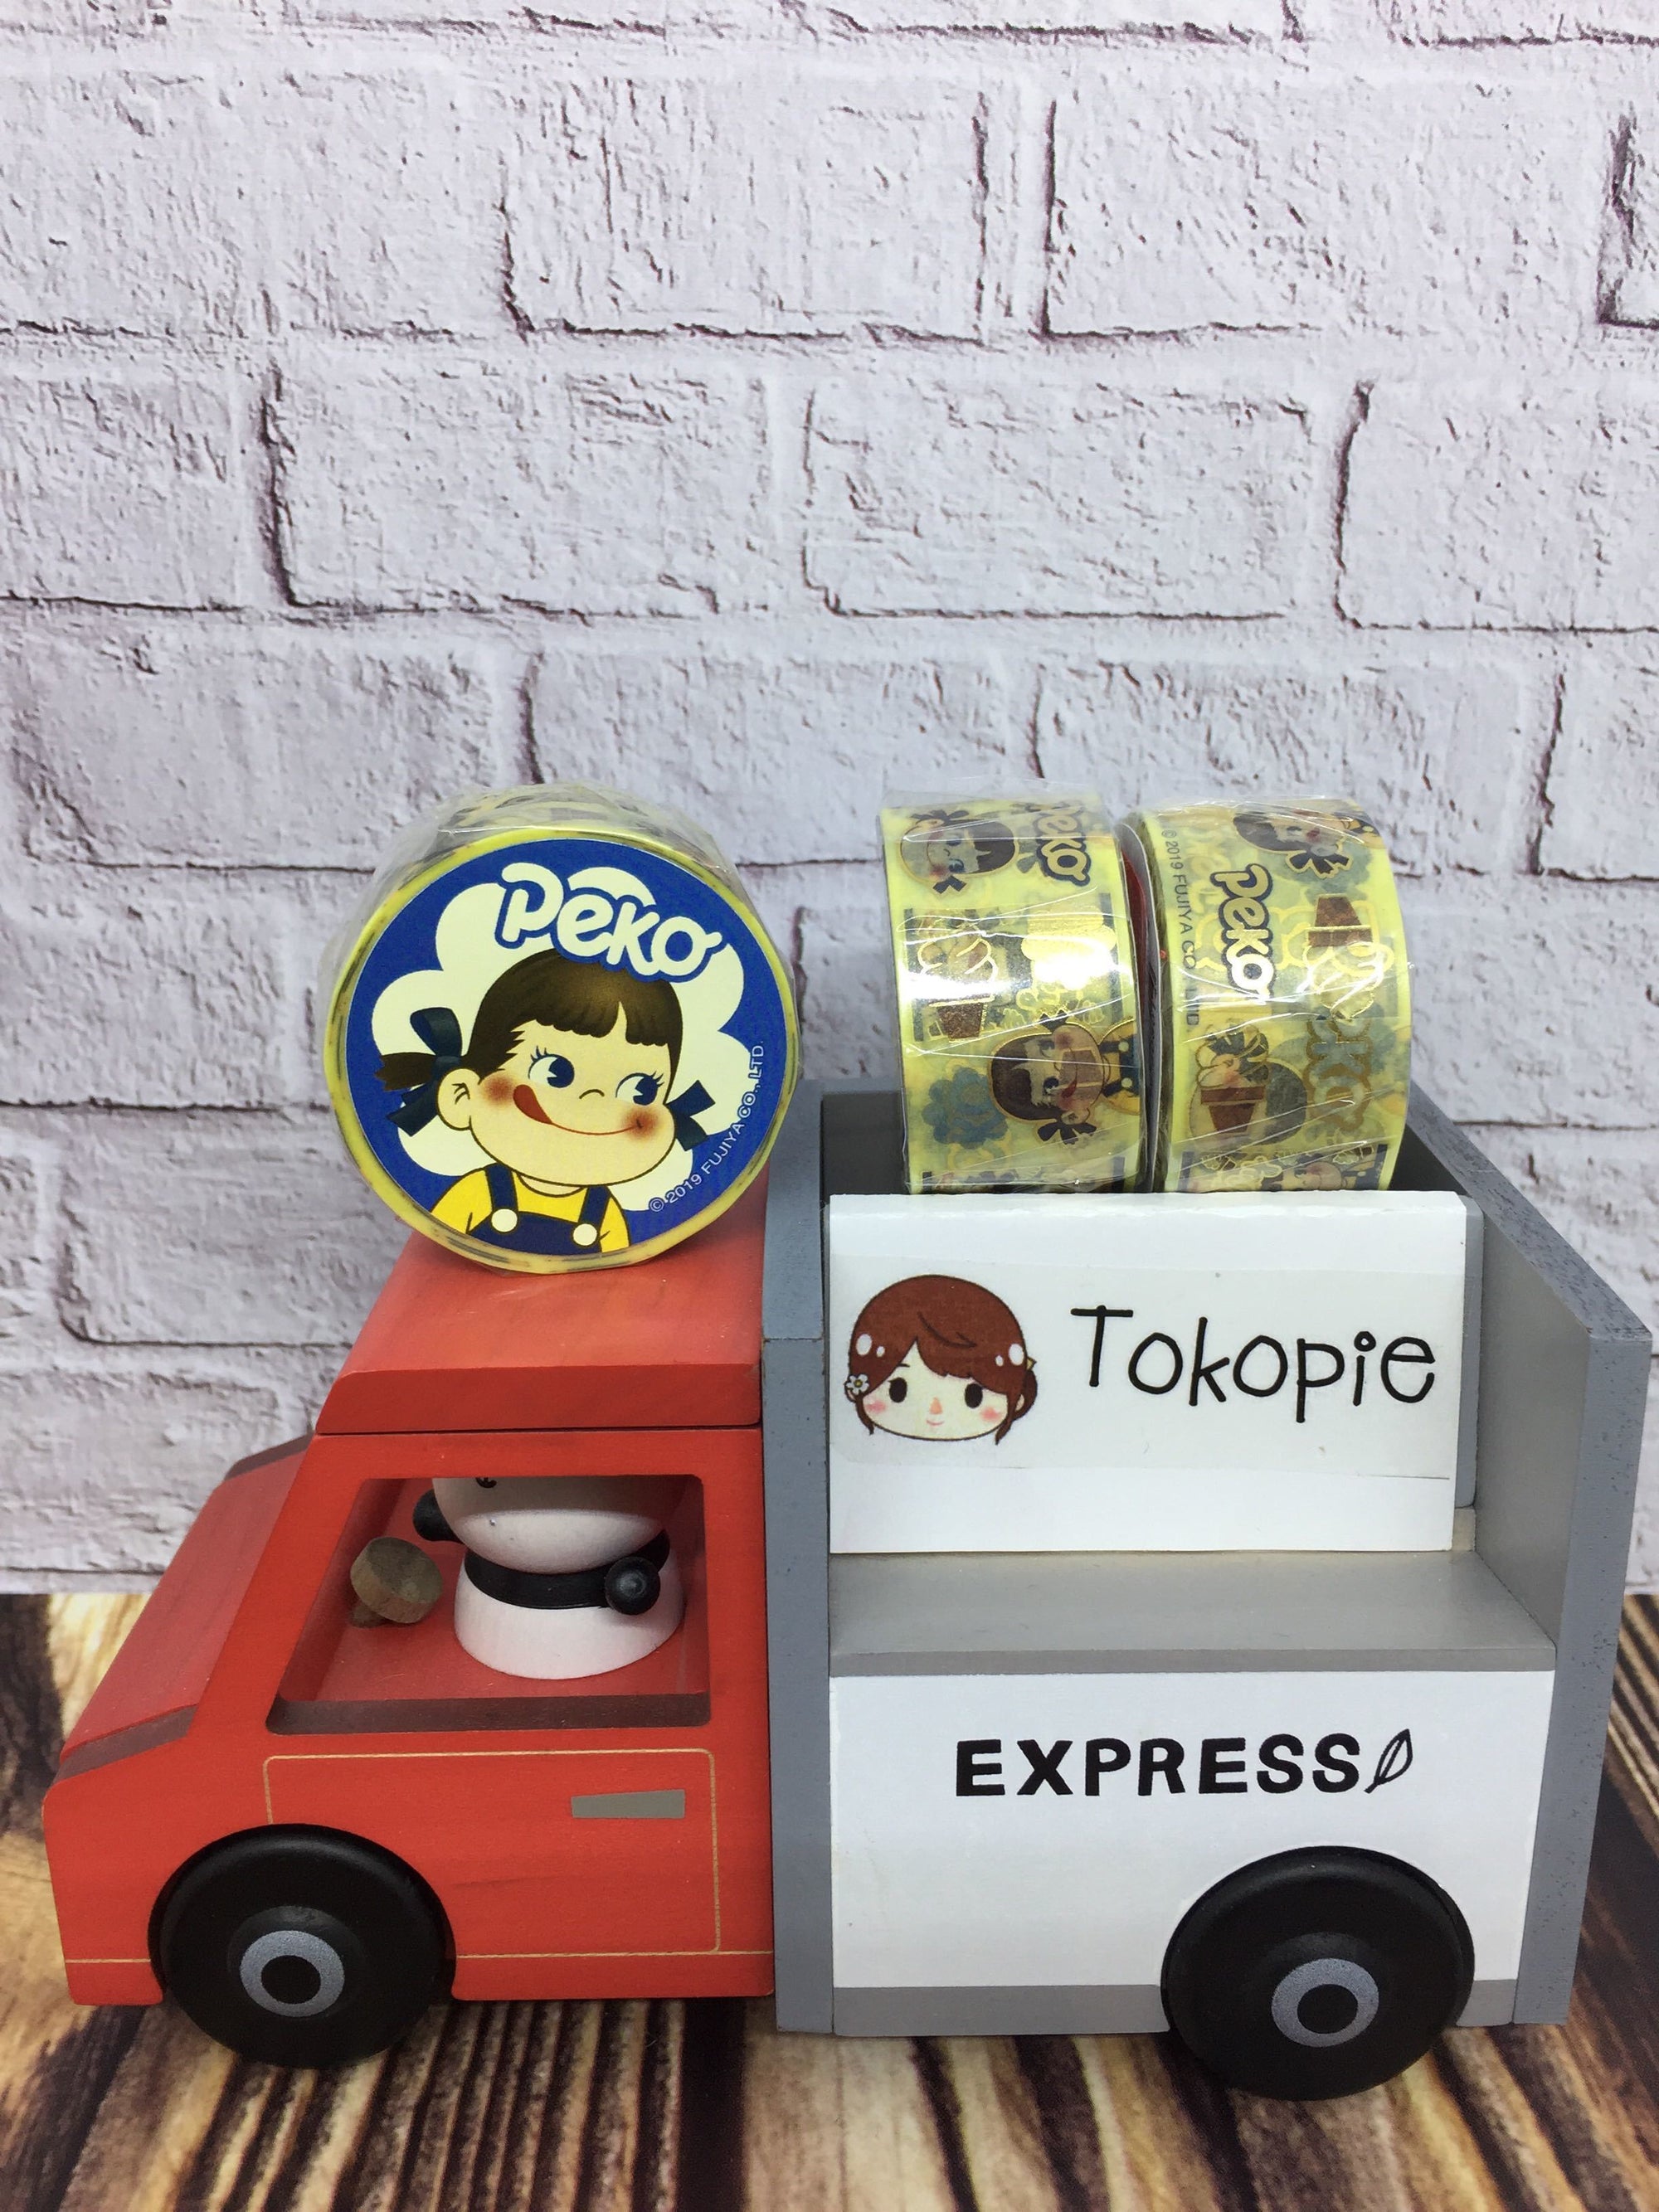 Peko-chan Ice Cream Soft Pattern Masking Tape